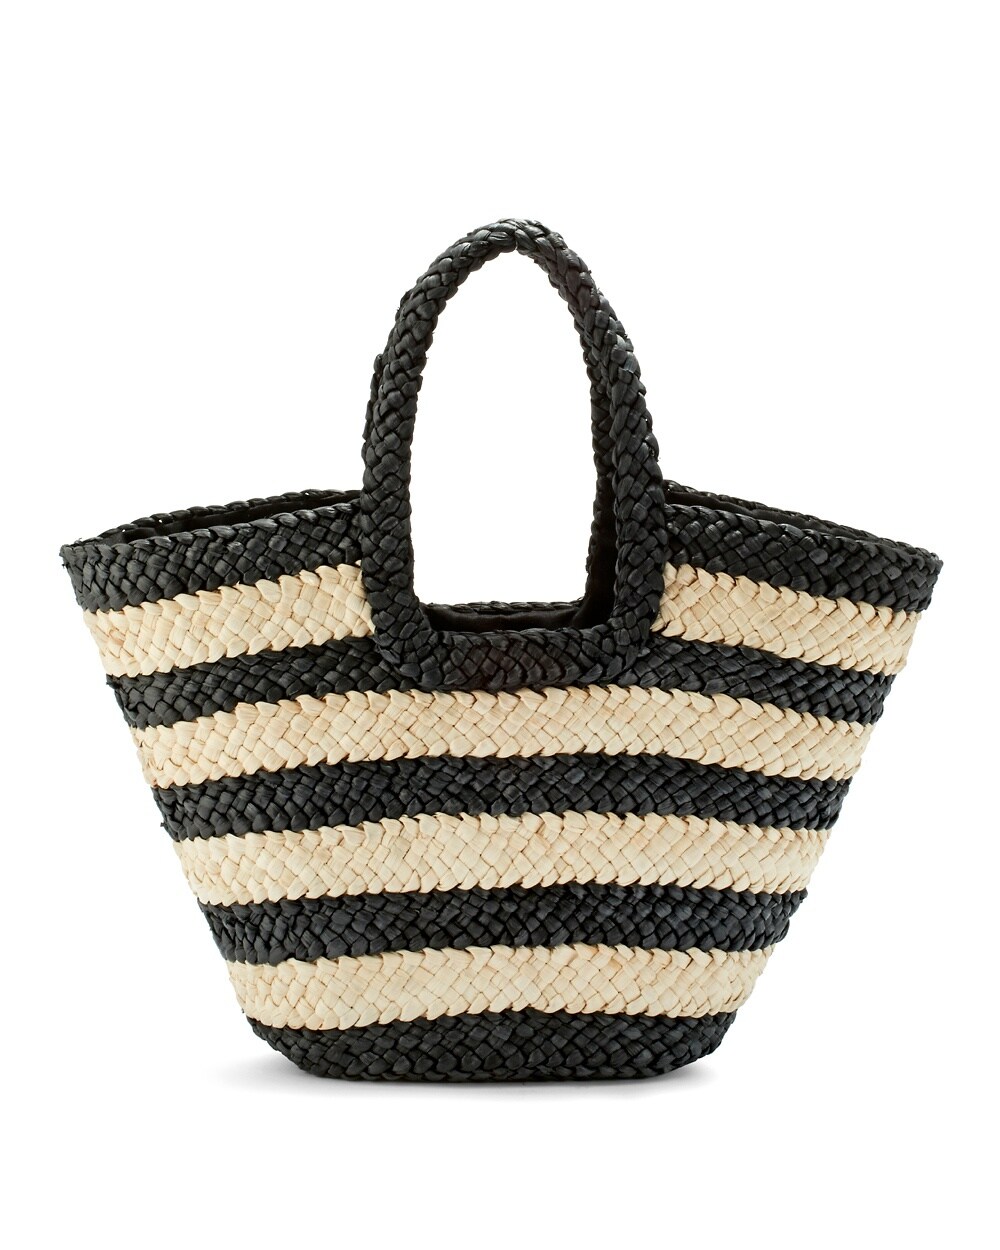 Black-and-White Striped Beach Bag - Chico's